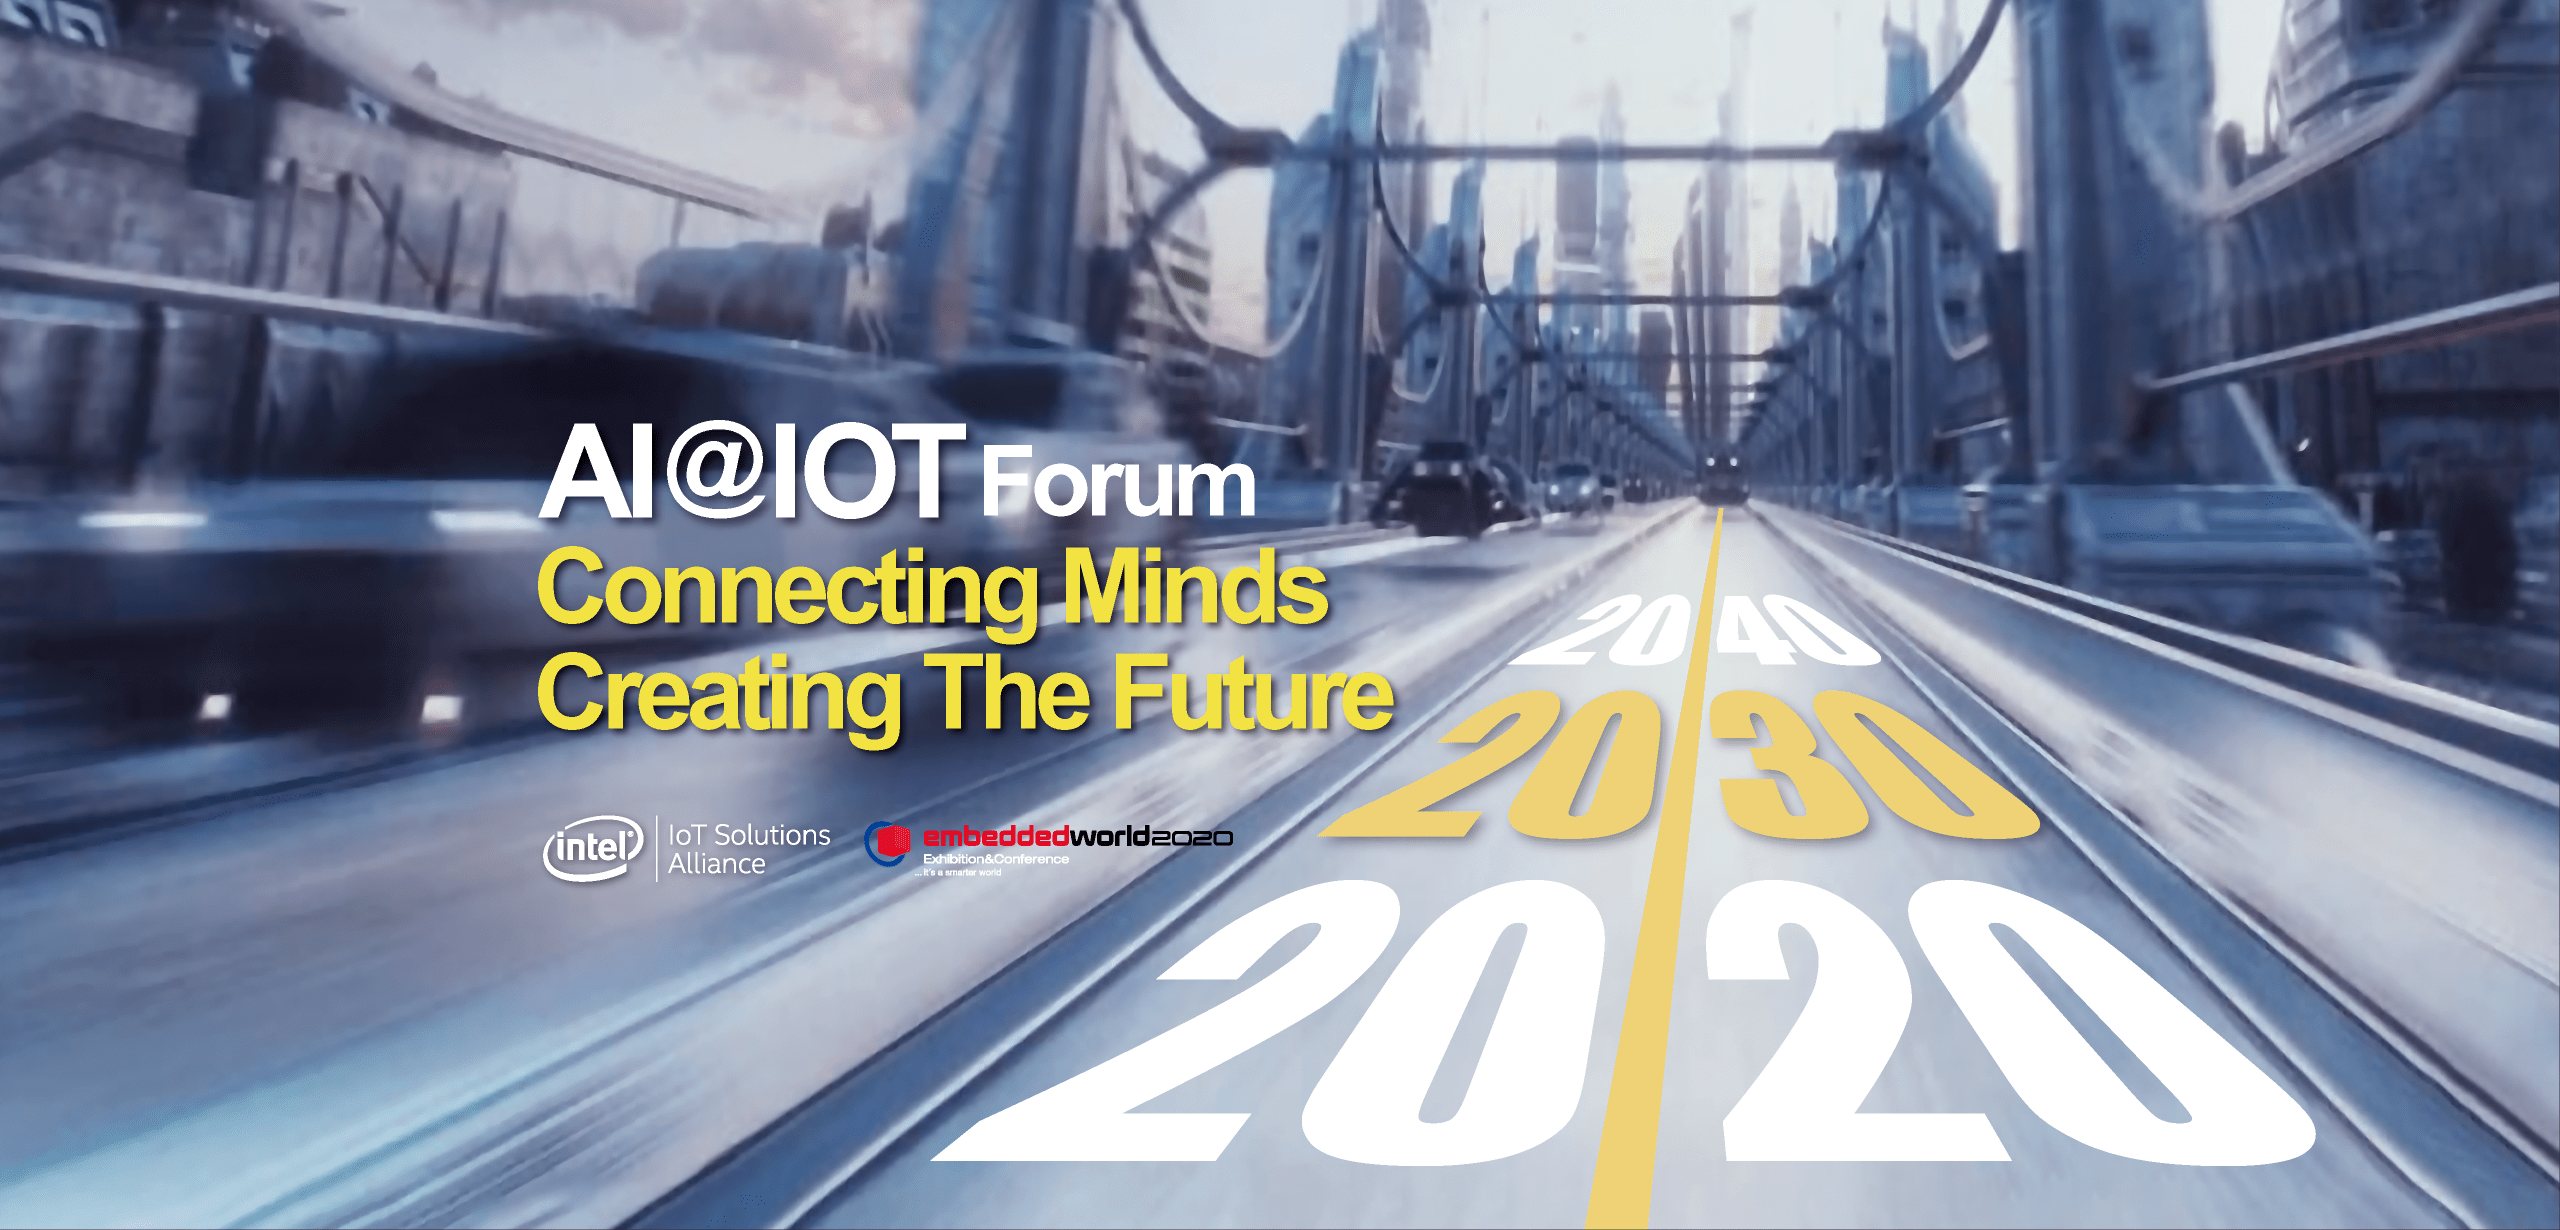 AI@IOT Forum -- Embedded World 2020